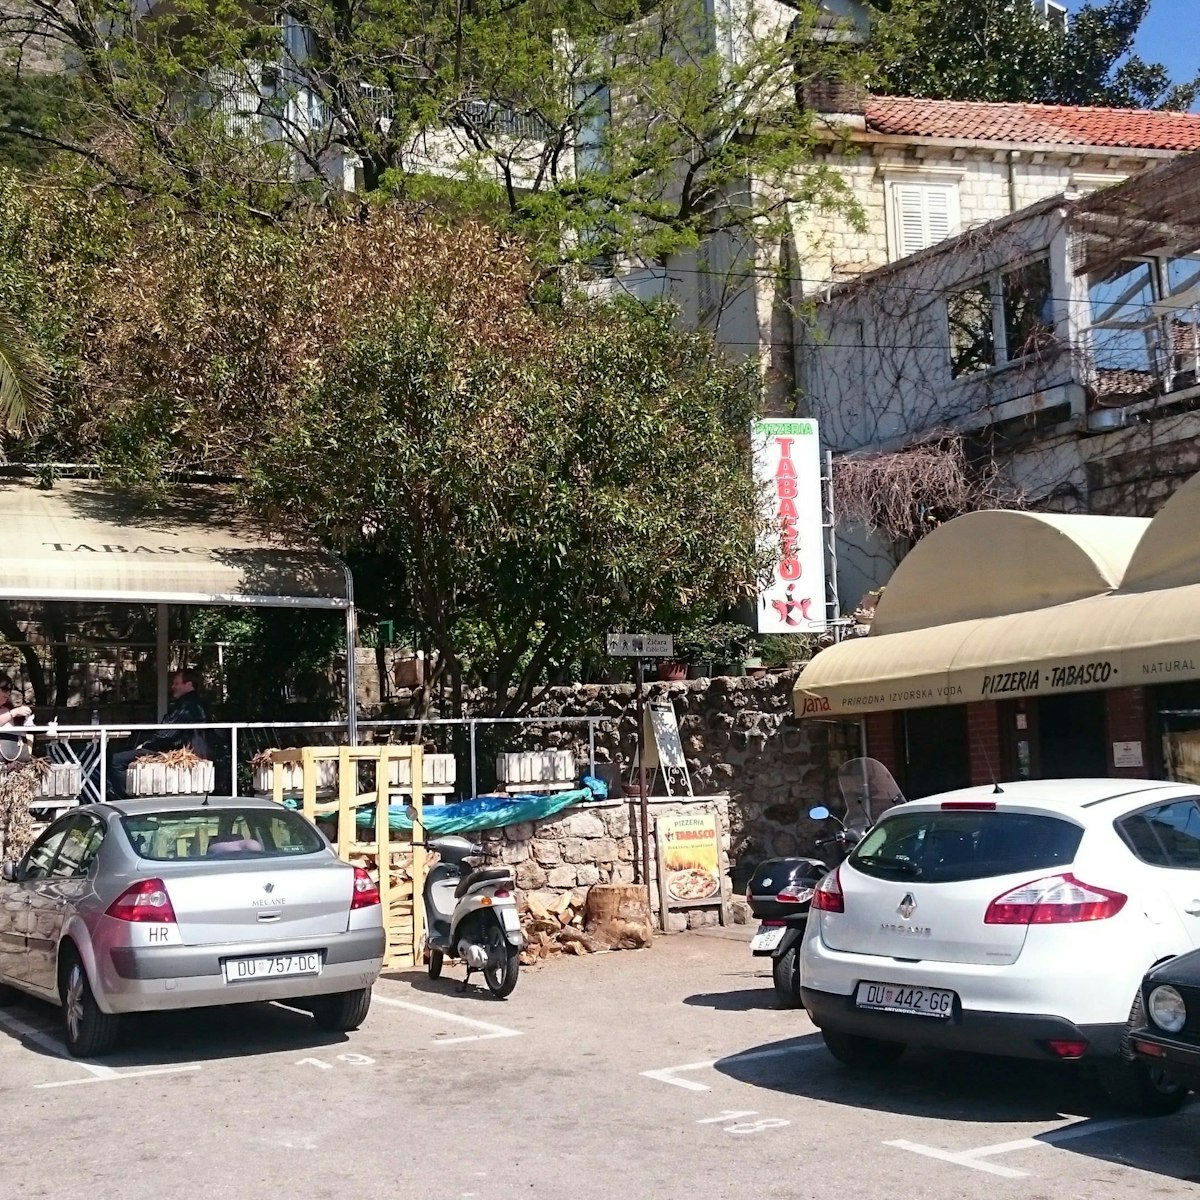 Tabasco pizzeria front entrance